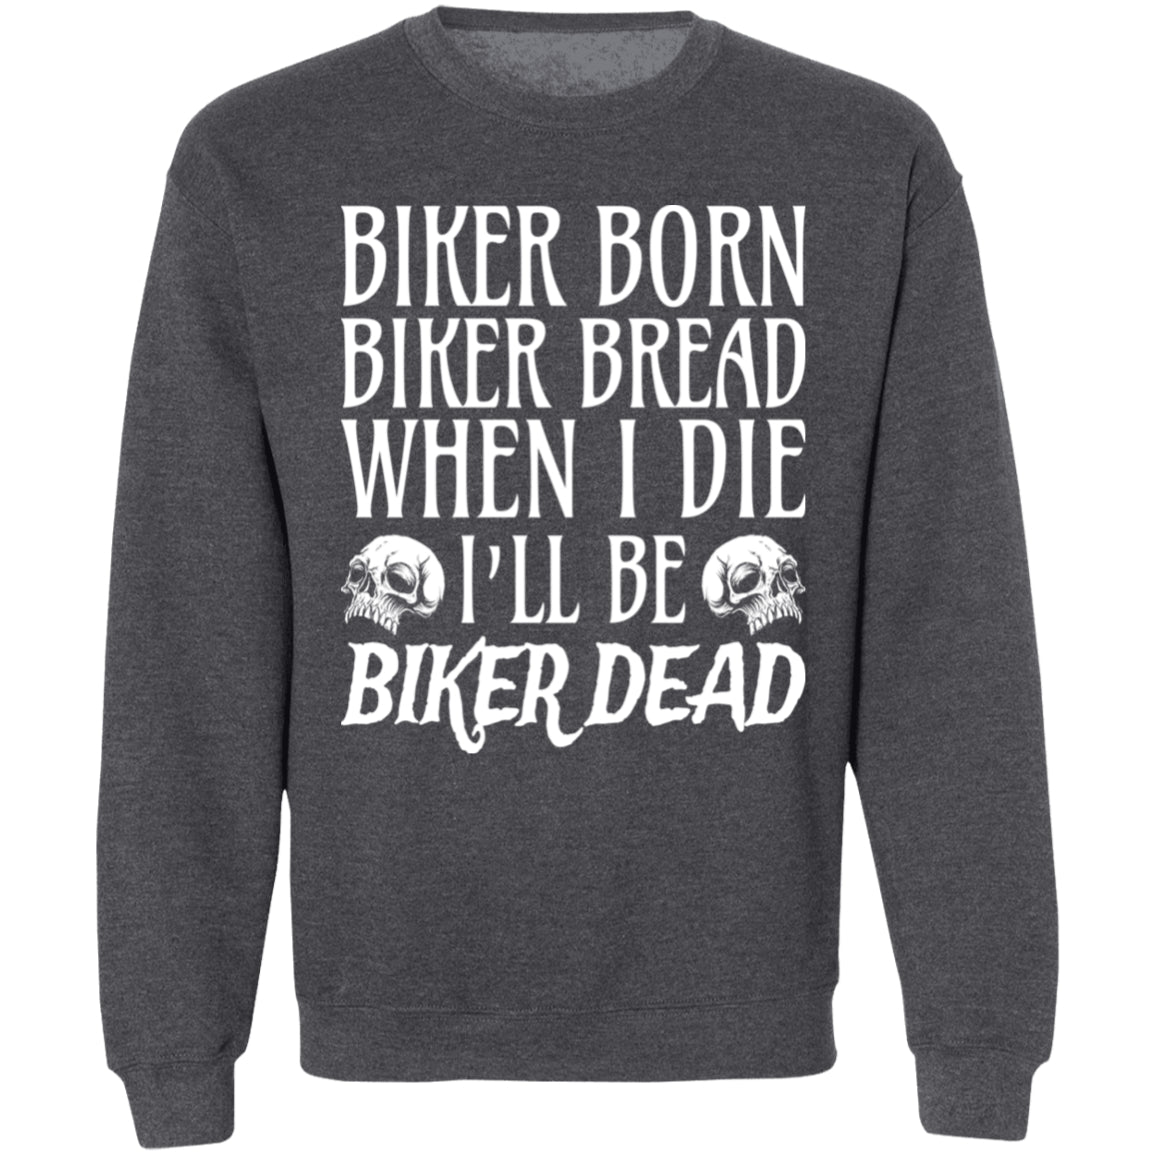 Apparel - Biker Born, Biker Bred Shirt